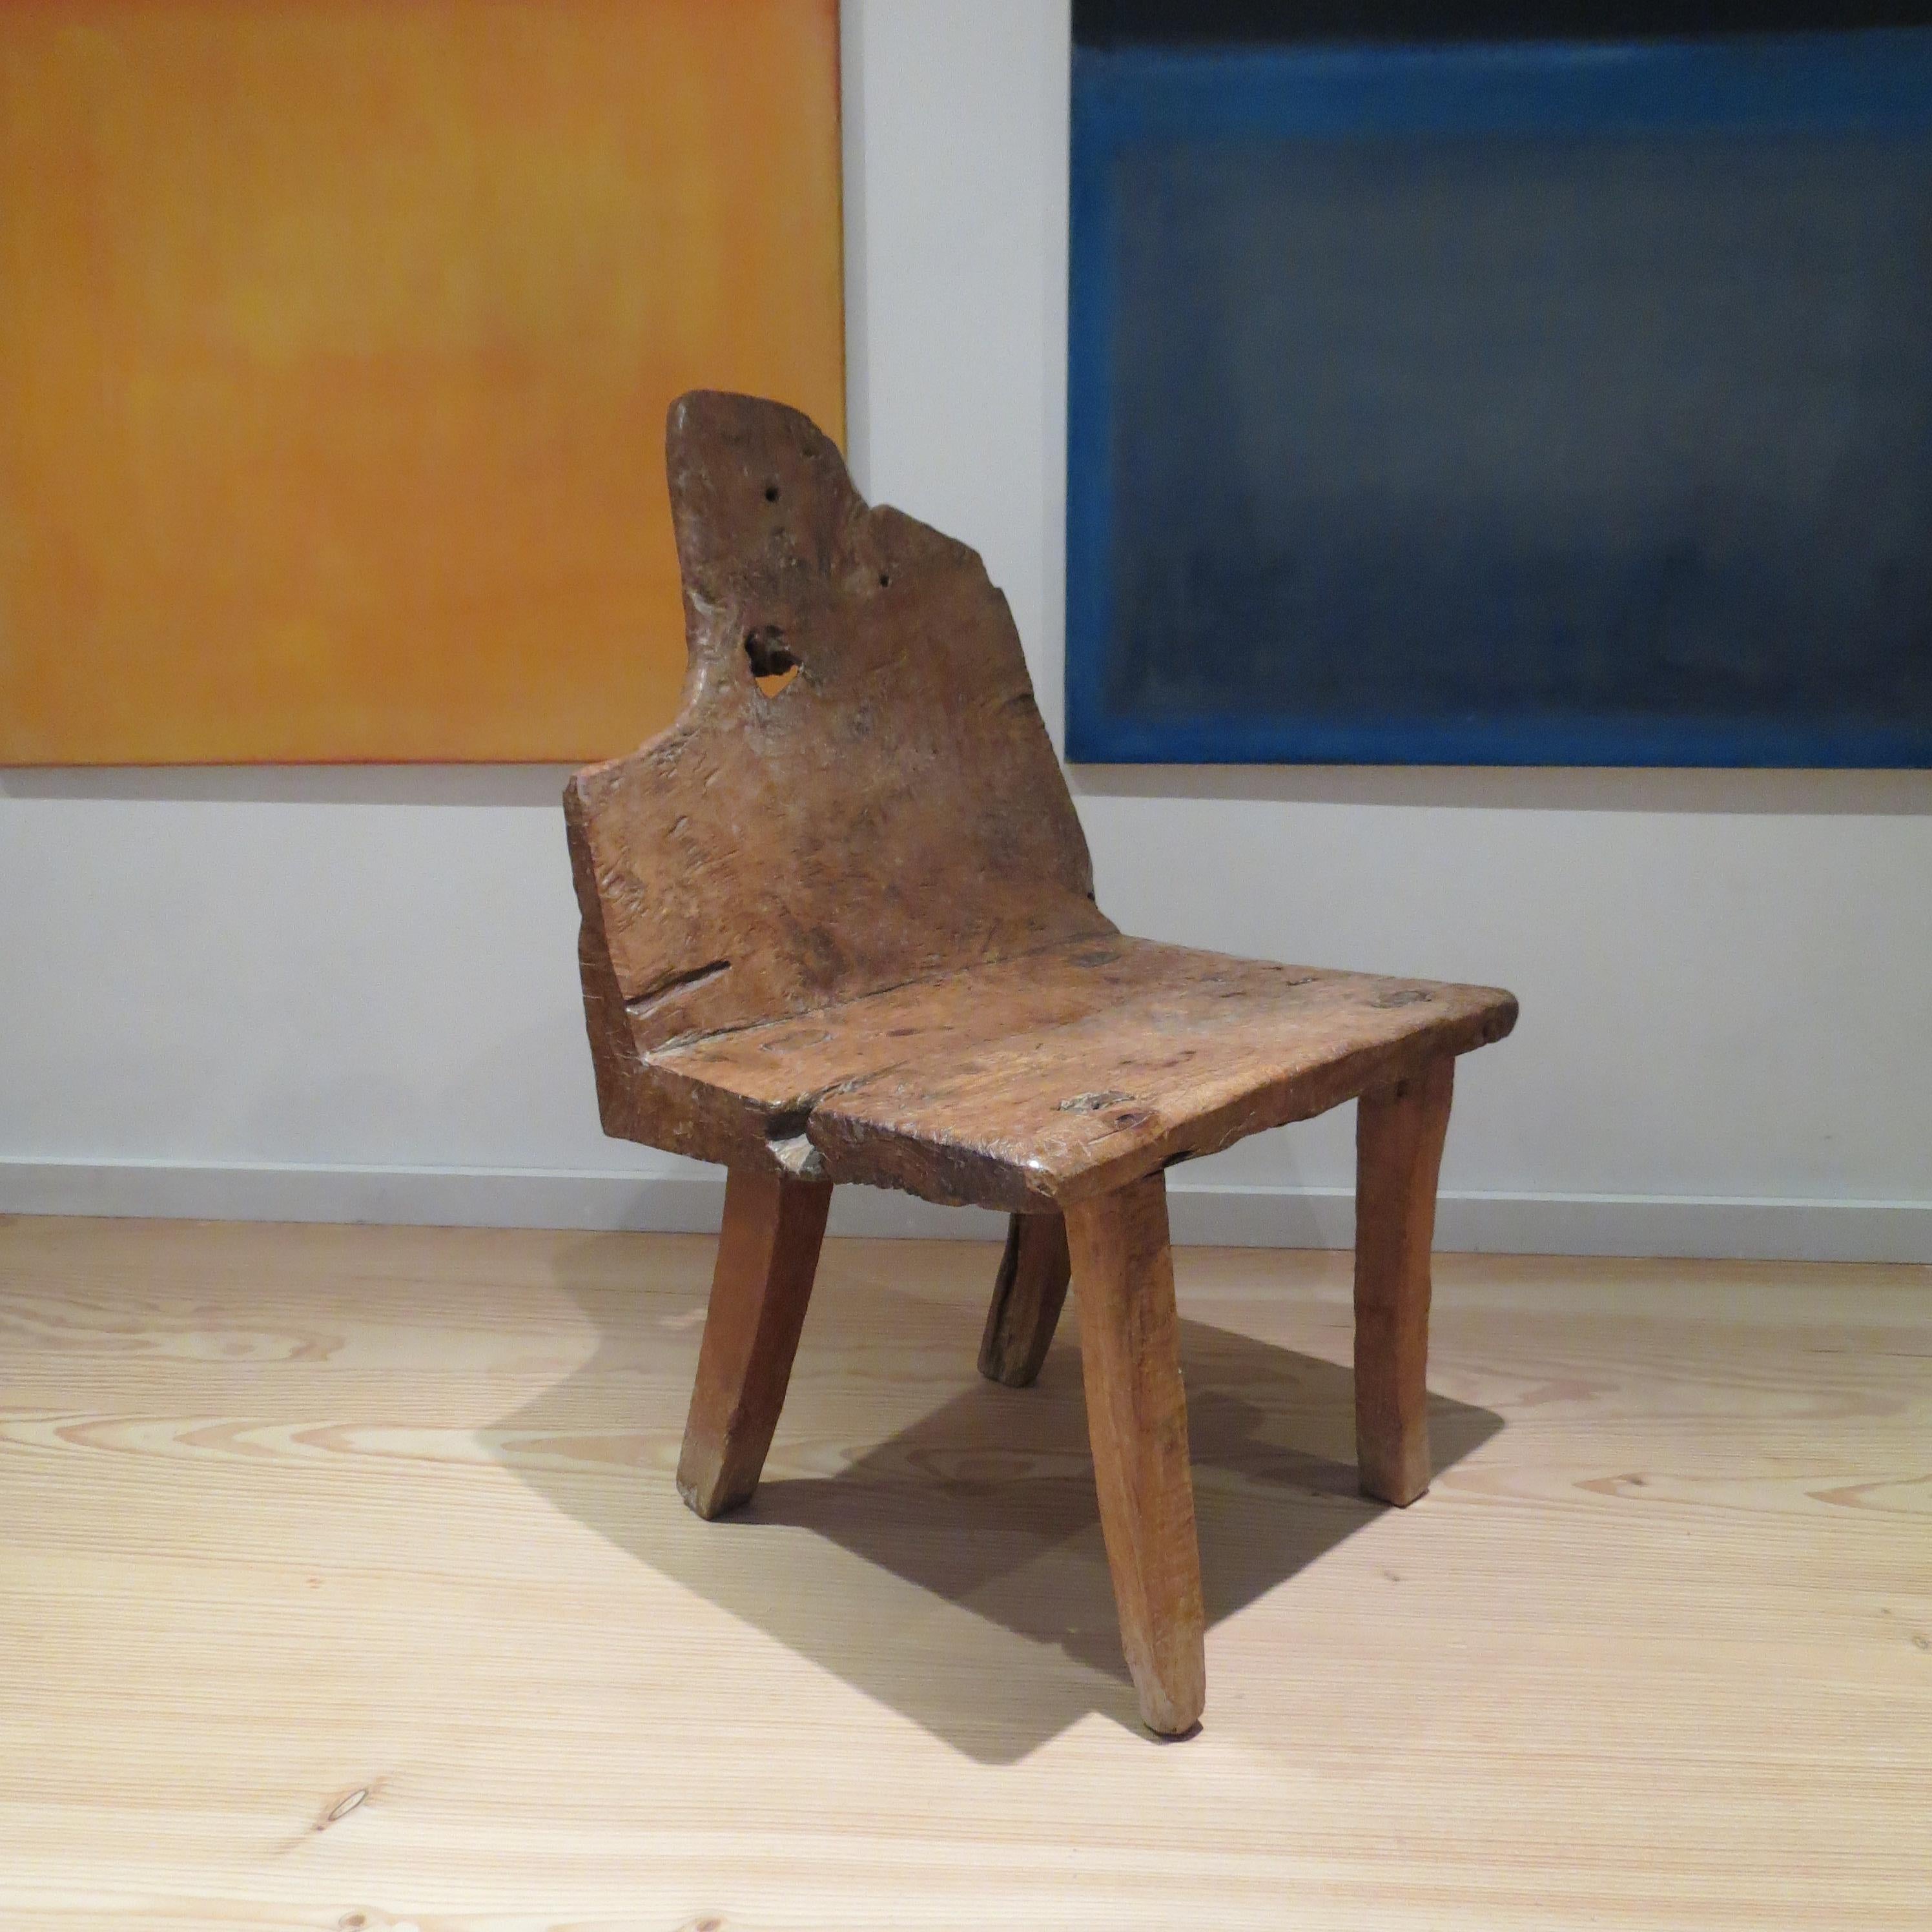 Rare Primitive Walnut Chair 19th Century English Wabi Sabi style For Sale 4